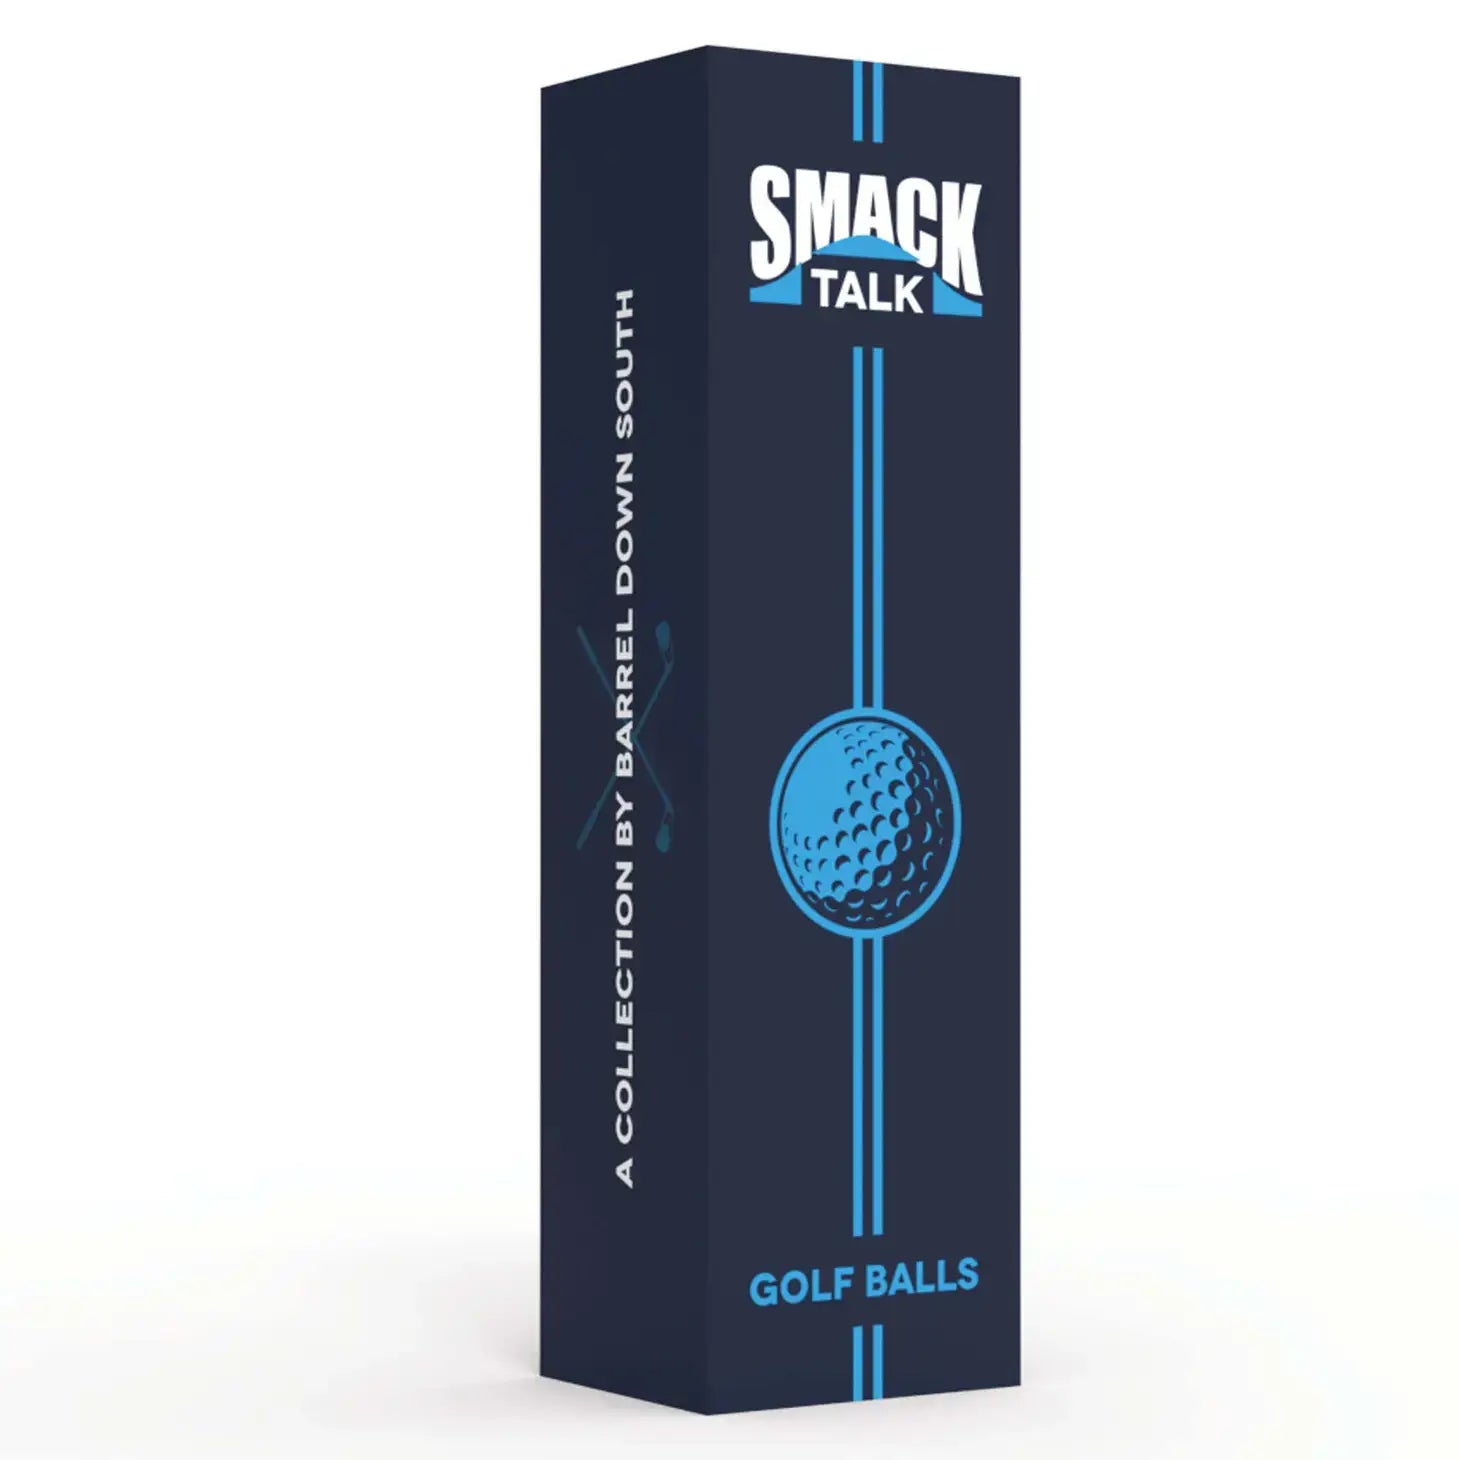 Smack Talk Golf Balls Volume 3 Golfing Gift